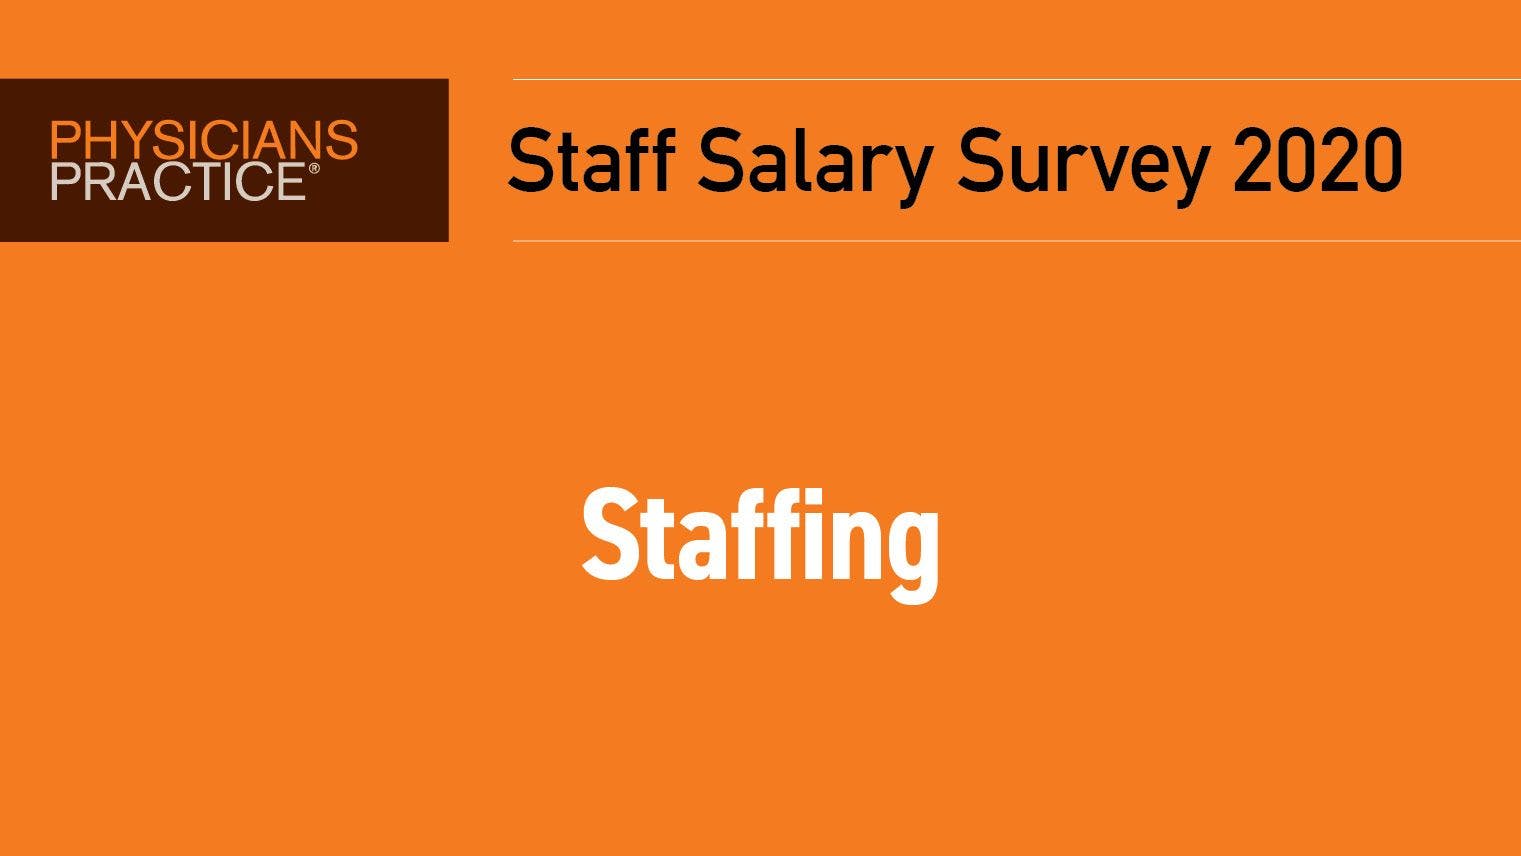 Staff Salary Survey 2020: Staffing trends 